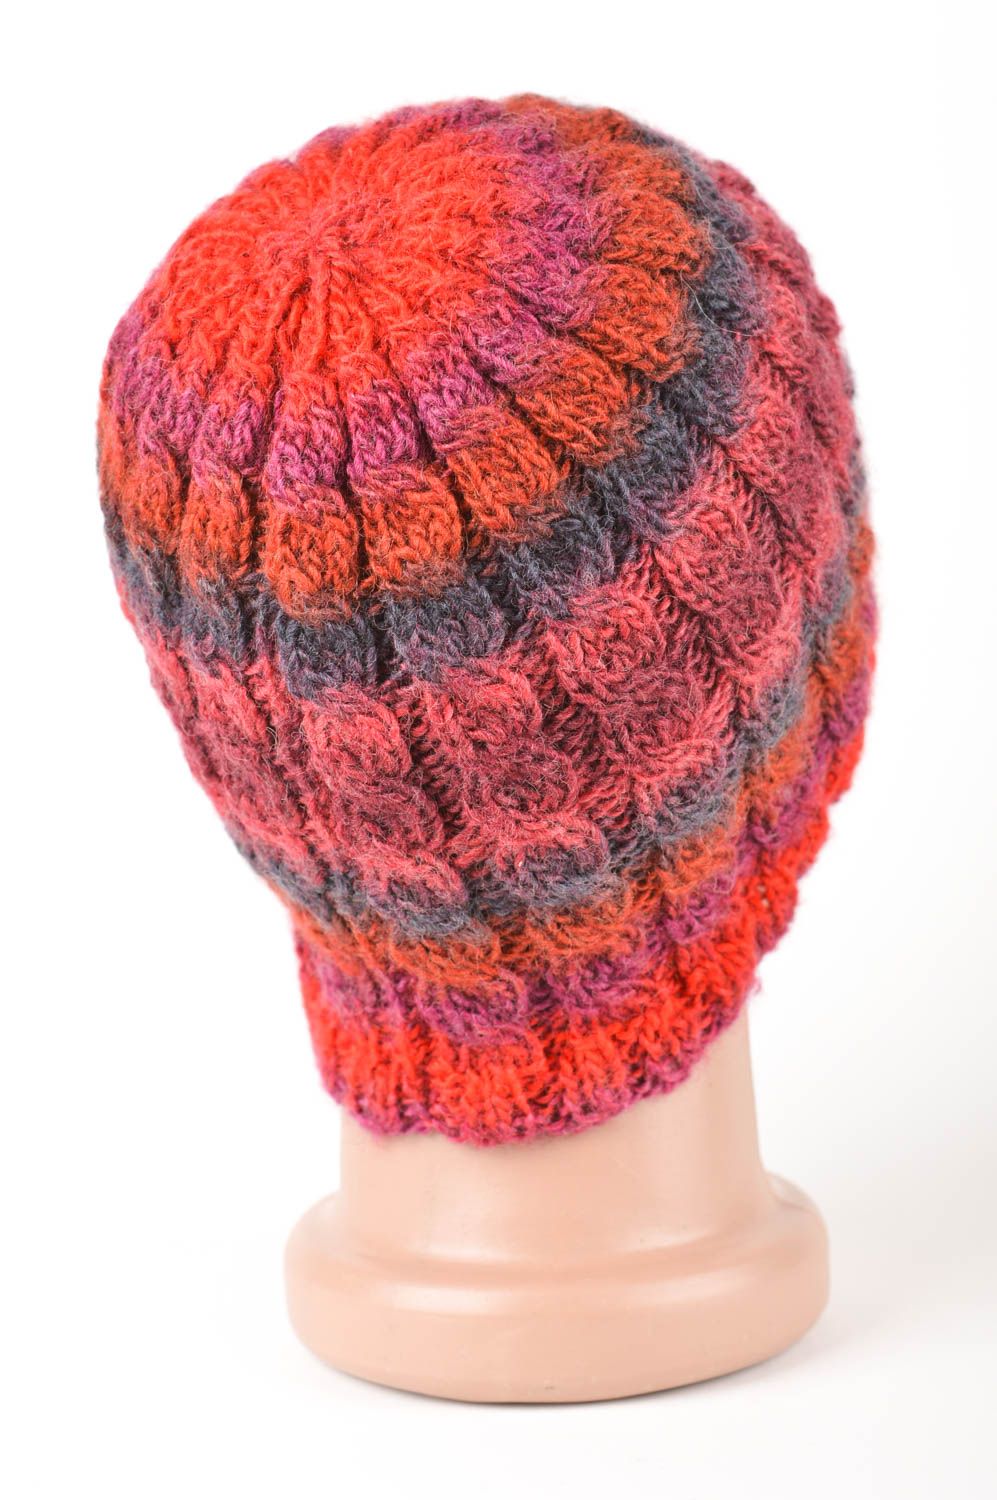 Handmade crochet hat fashion hats winter hats for women best gifts for women photo 5